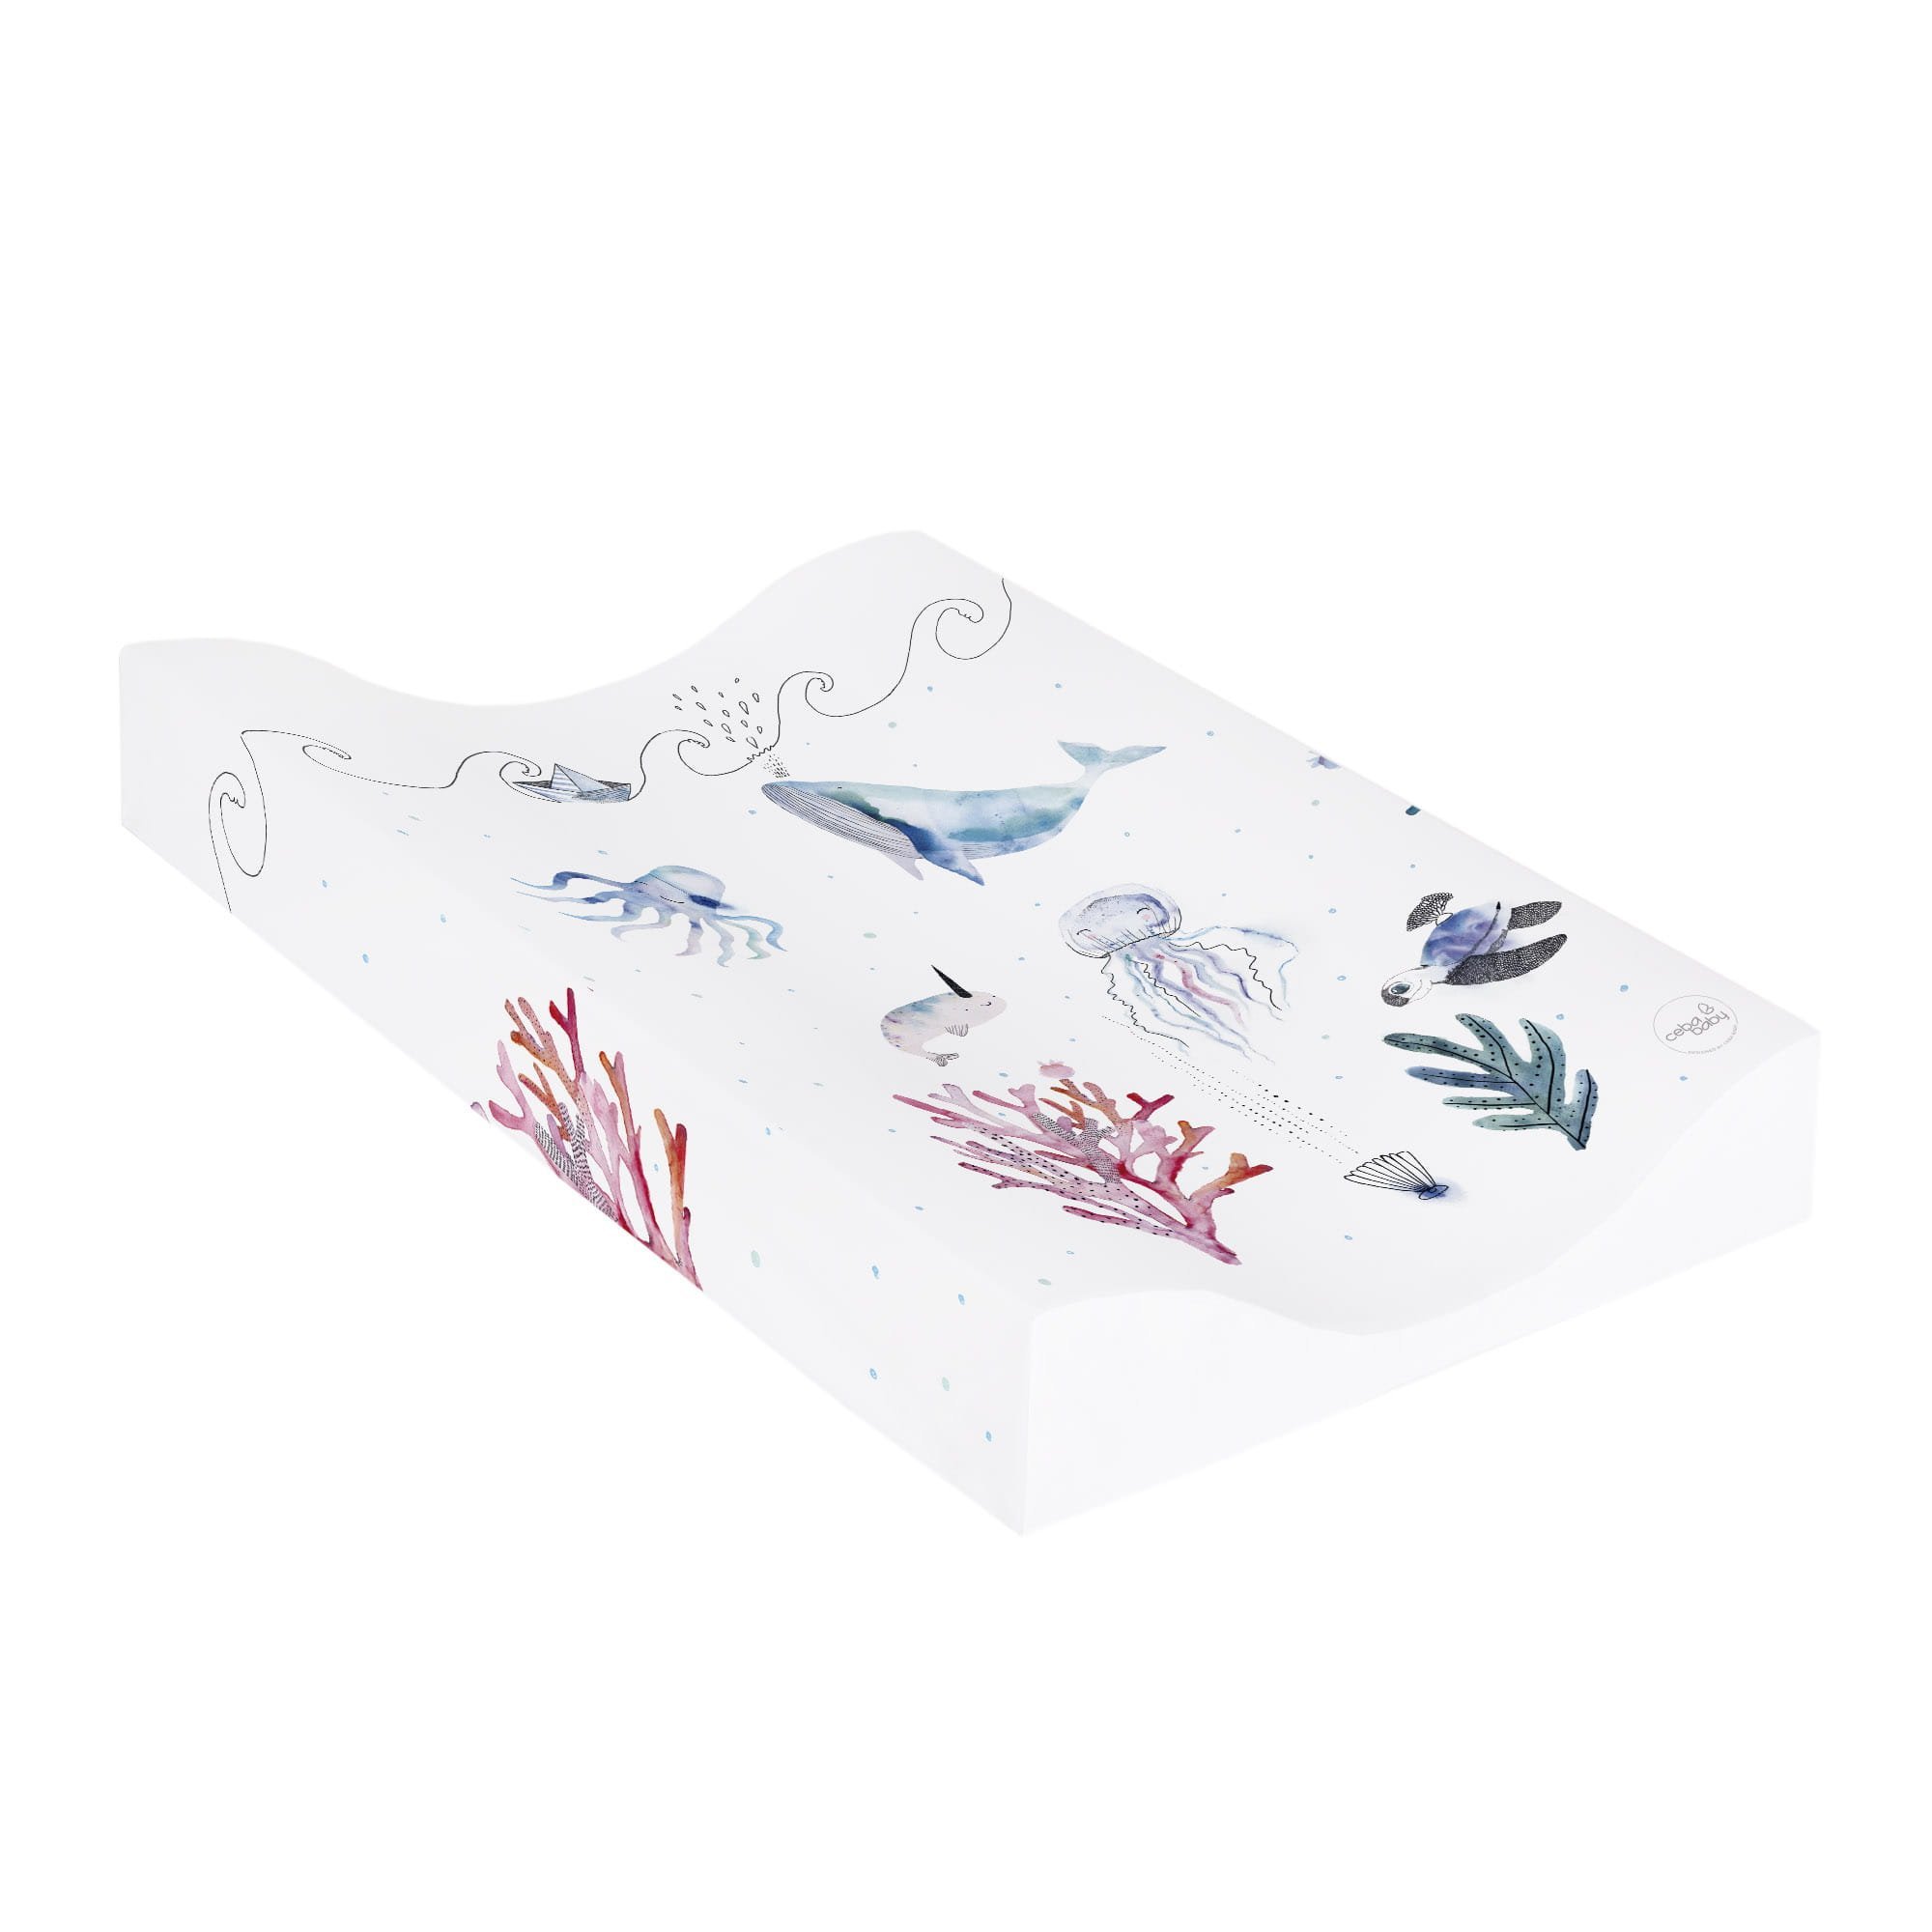 P�ebalovac� podlo�ka m�kk� tvarovan� COSY 48x70 cm Watercolor World Ocean - zv��i� obr�zok